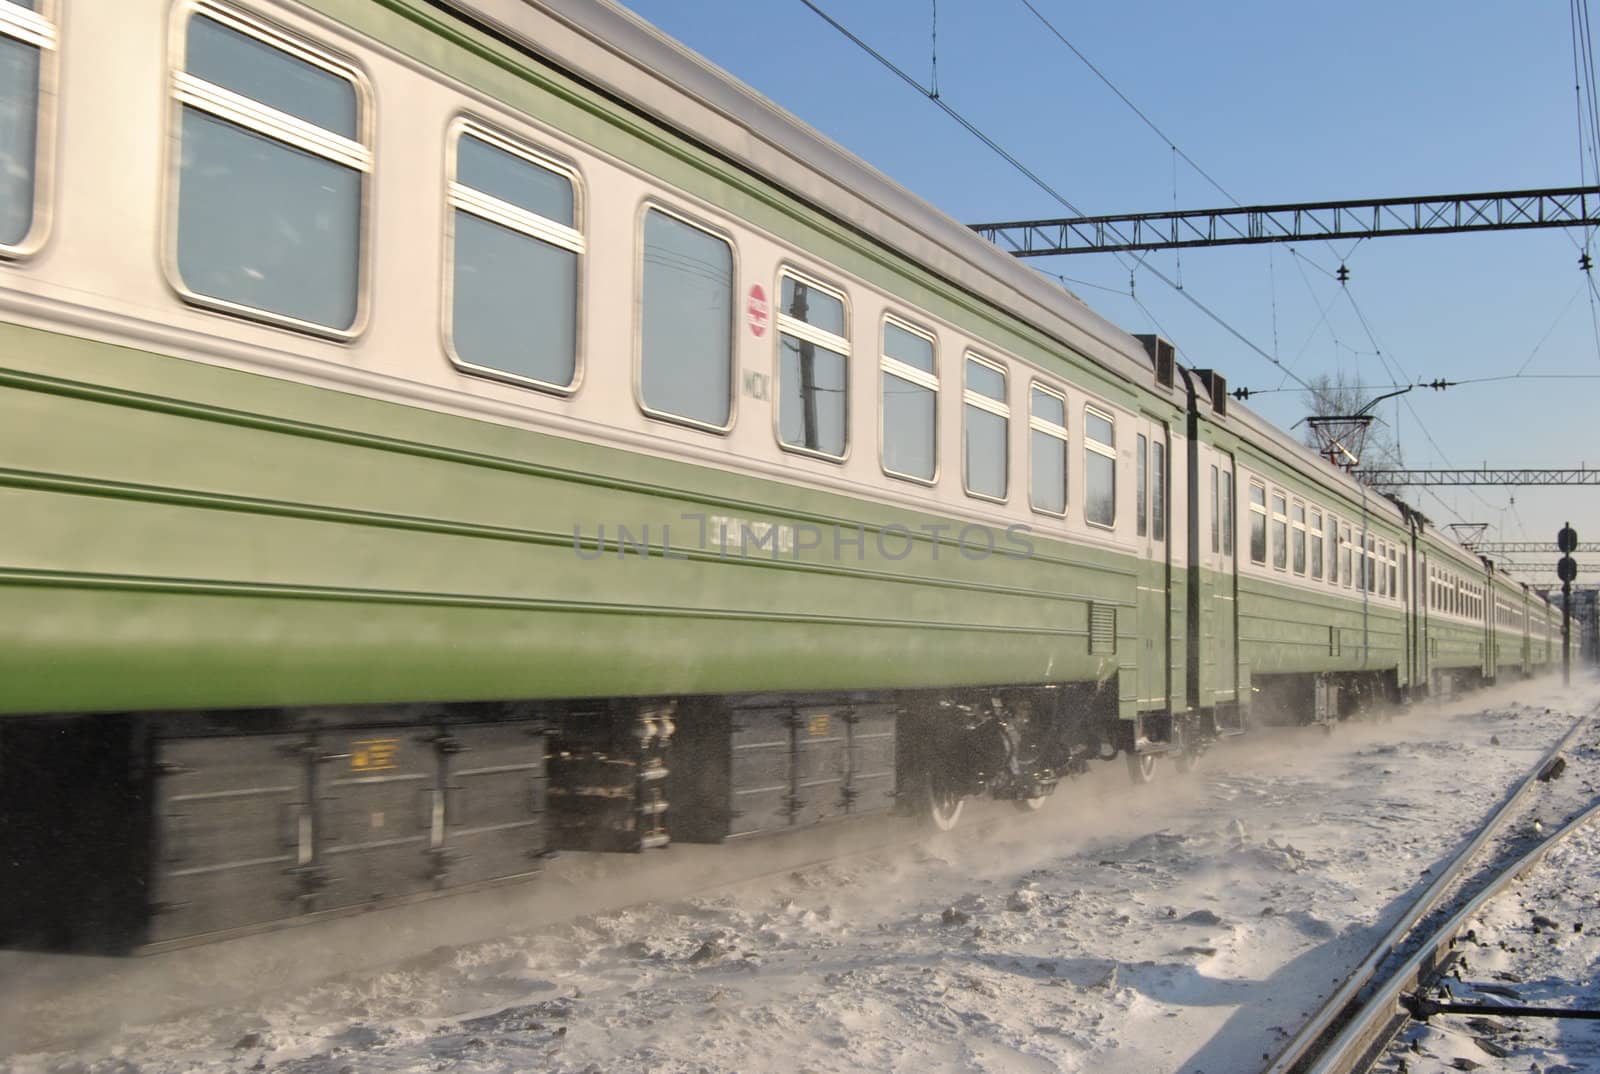 A passenger train travels on a snowy winter rail